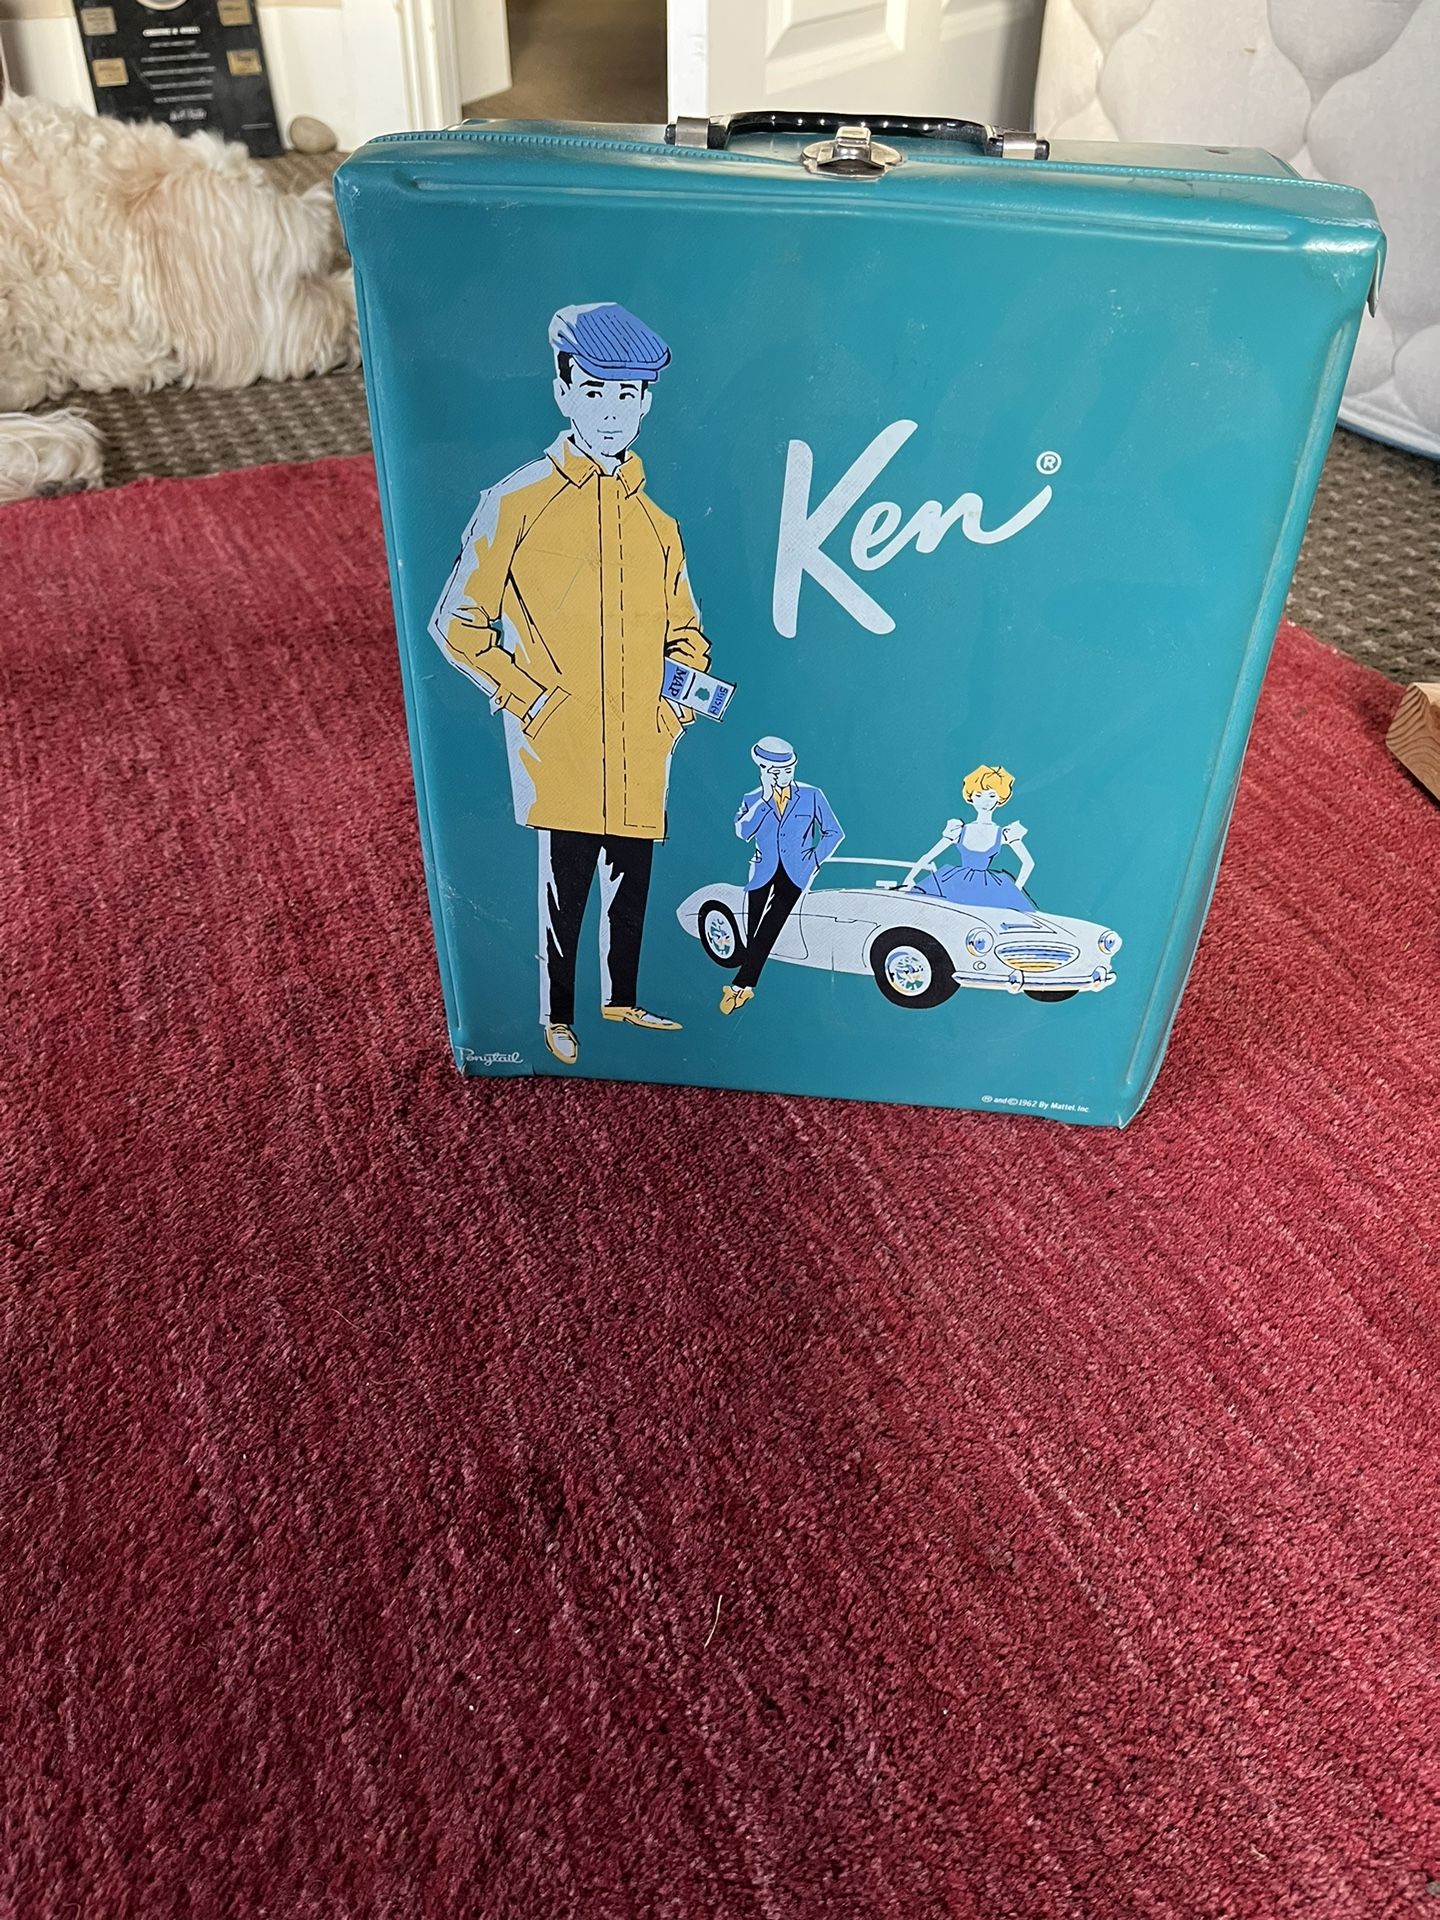 Ken /Barbie Doll Carrying Case